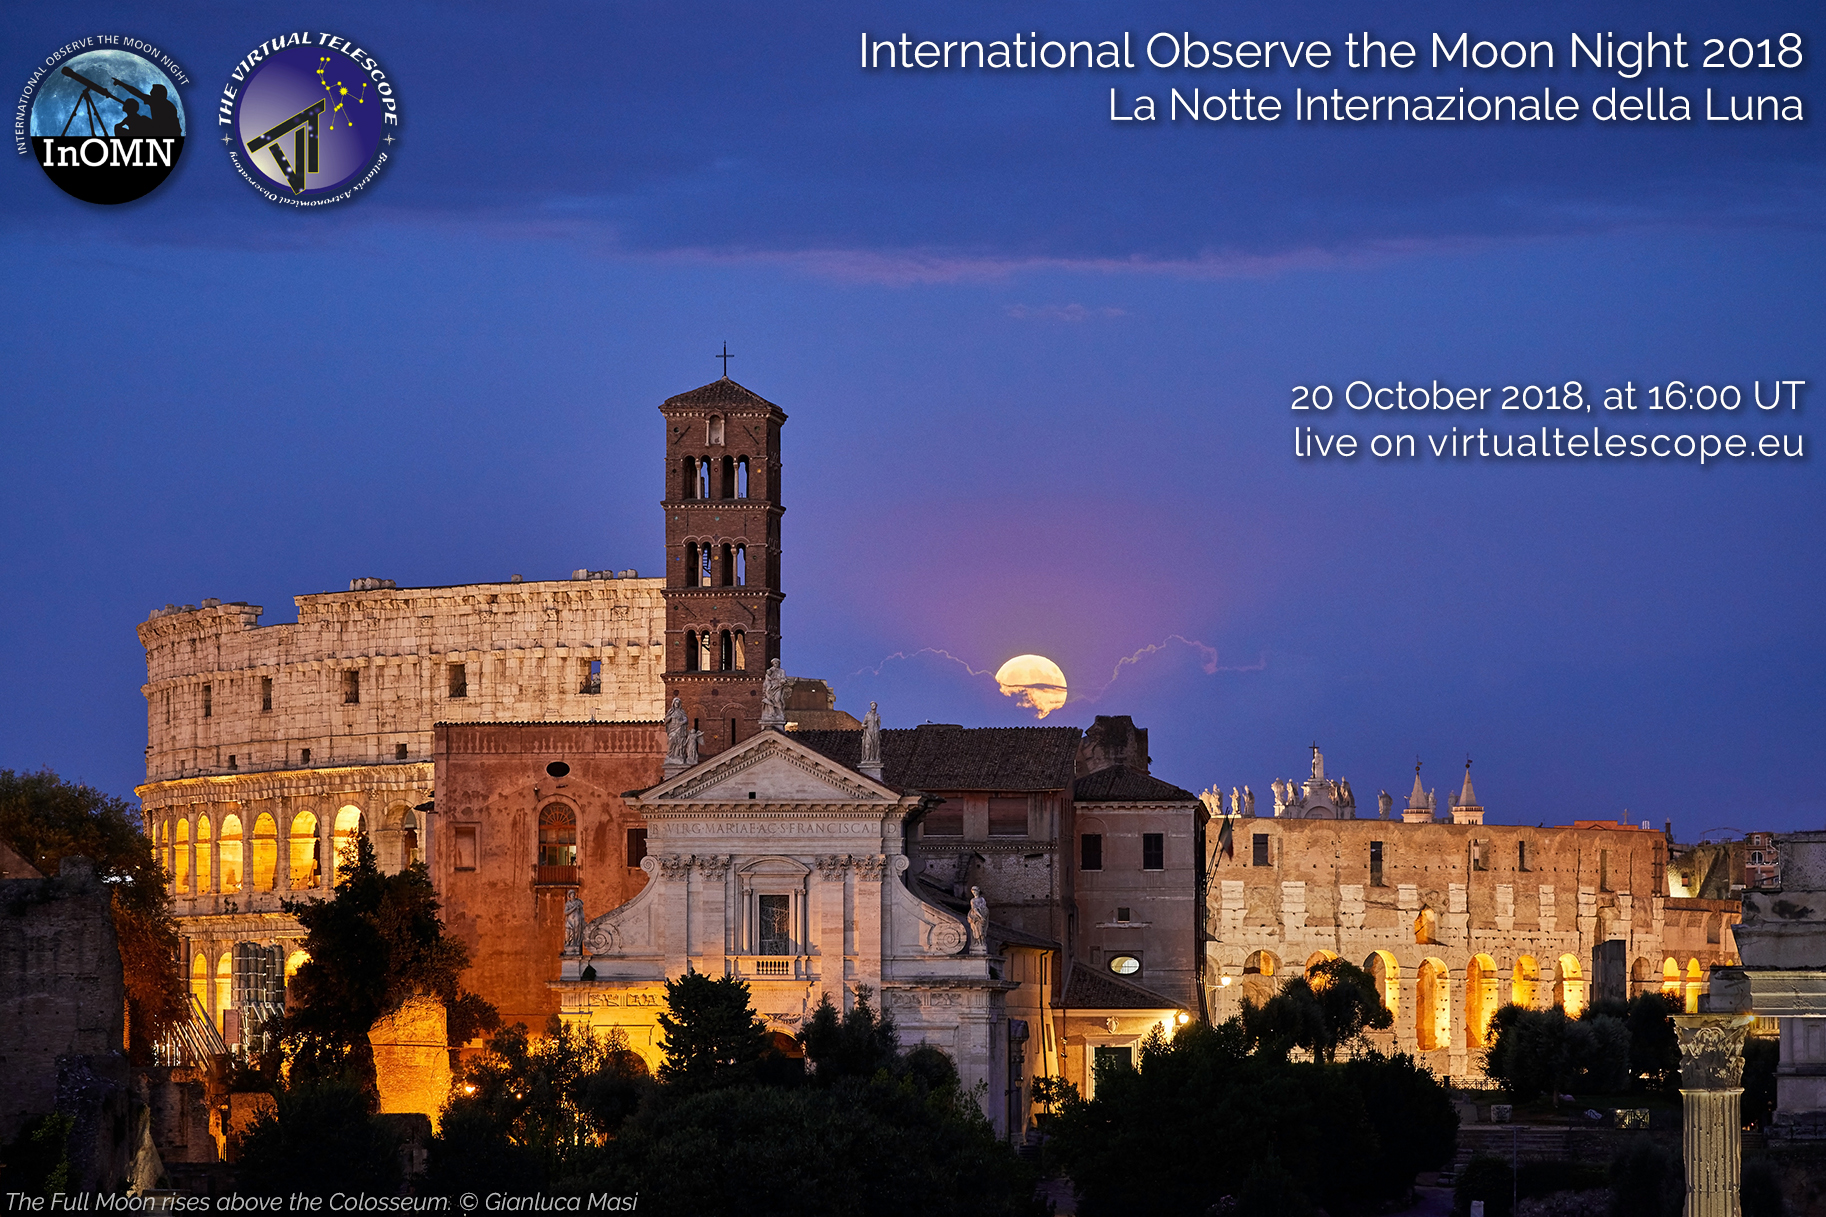 International Observe the Moon Night 2018: online observation - 20 Oct. 2018